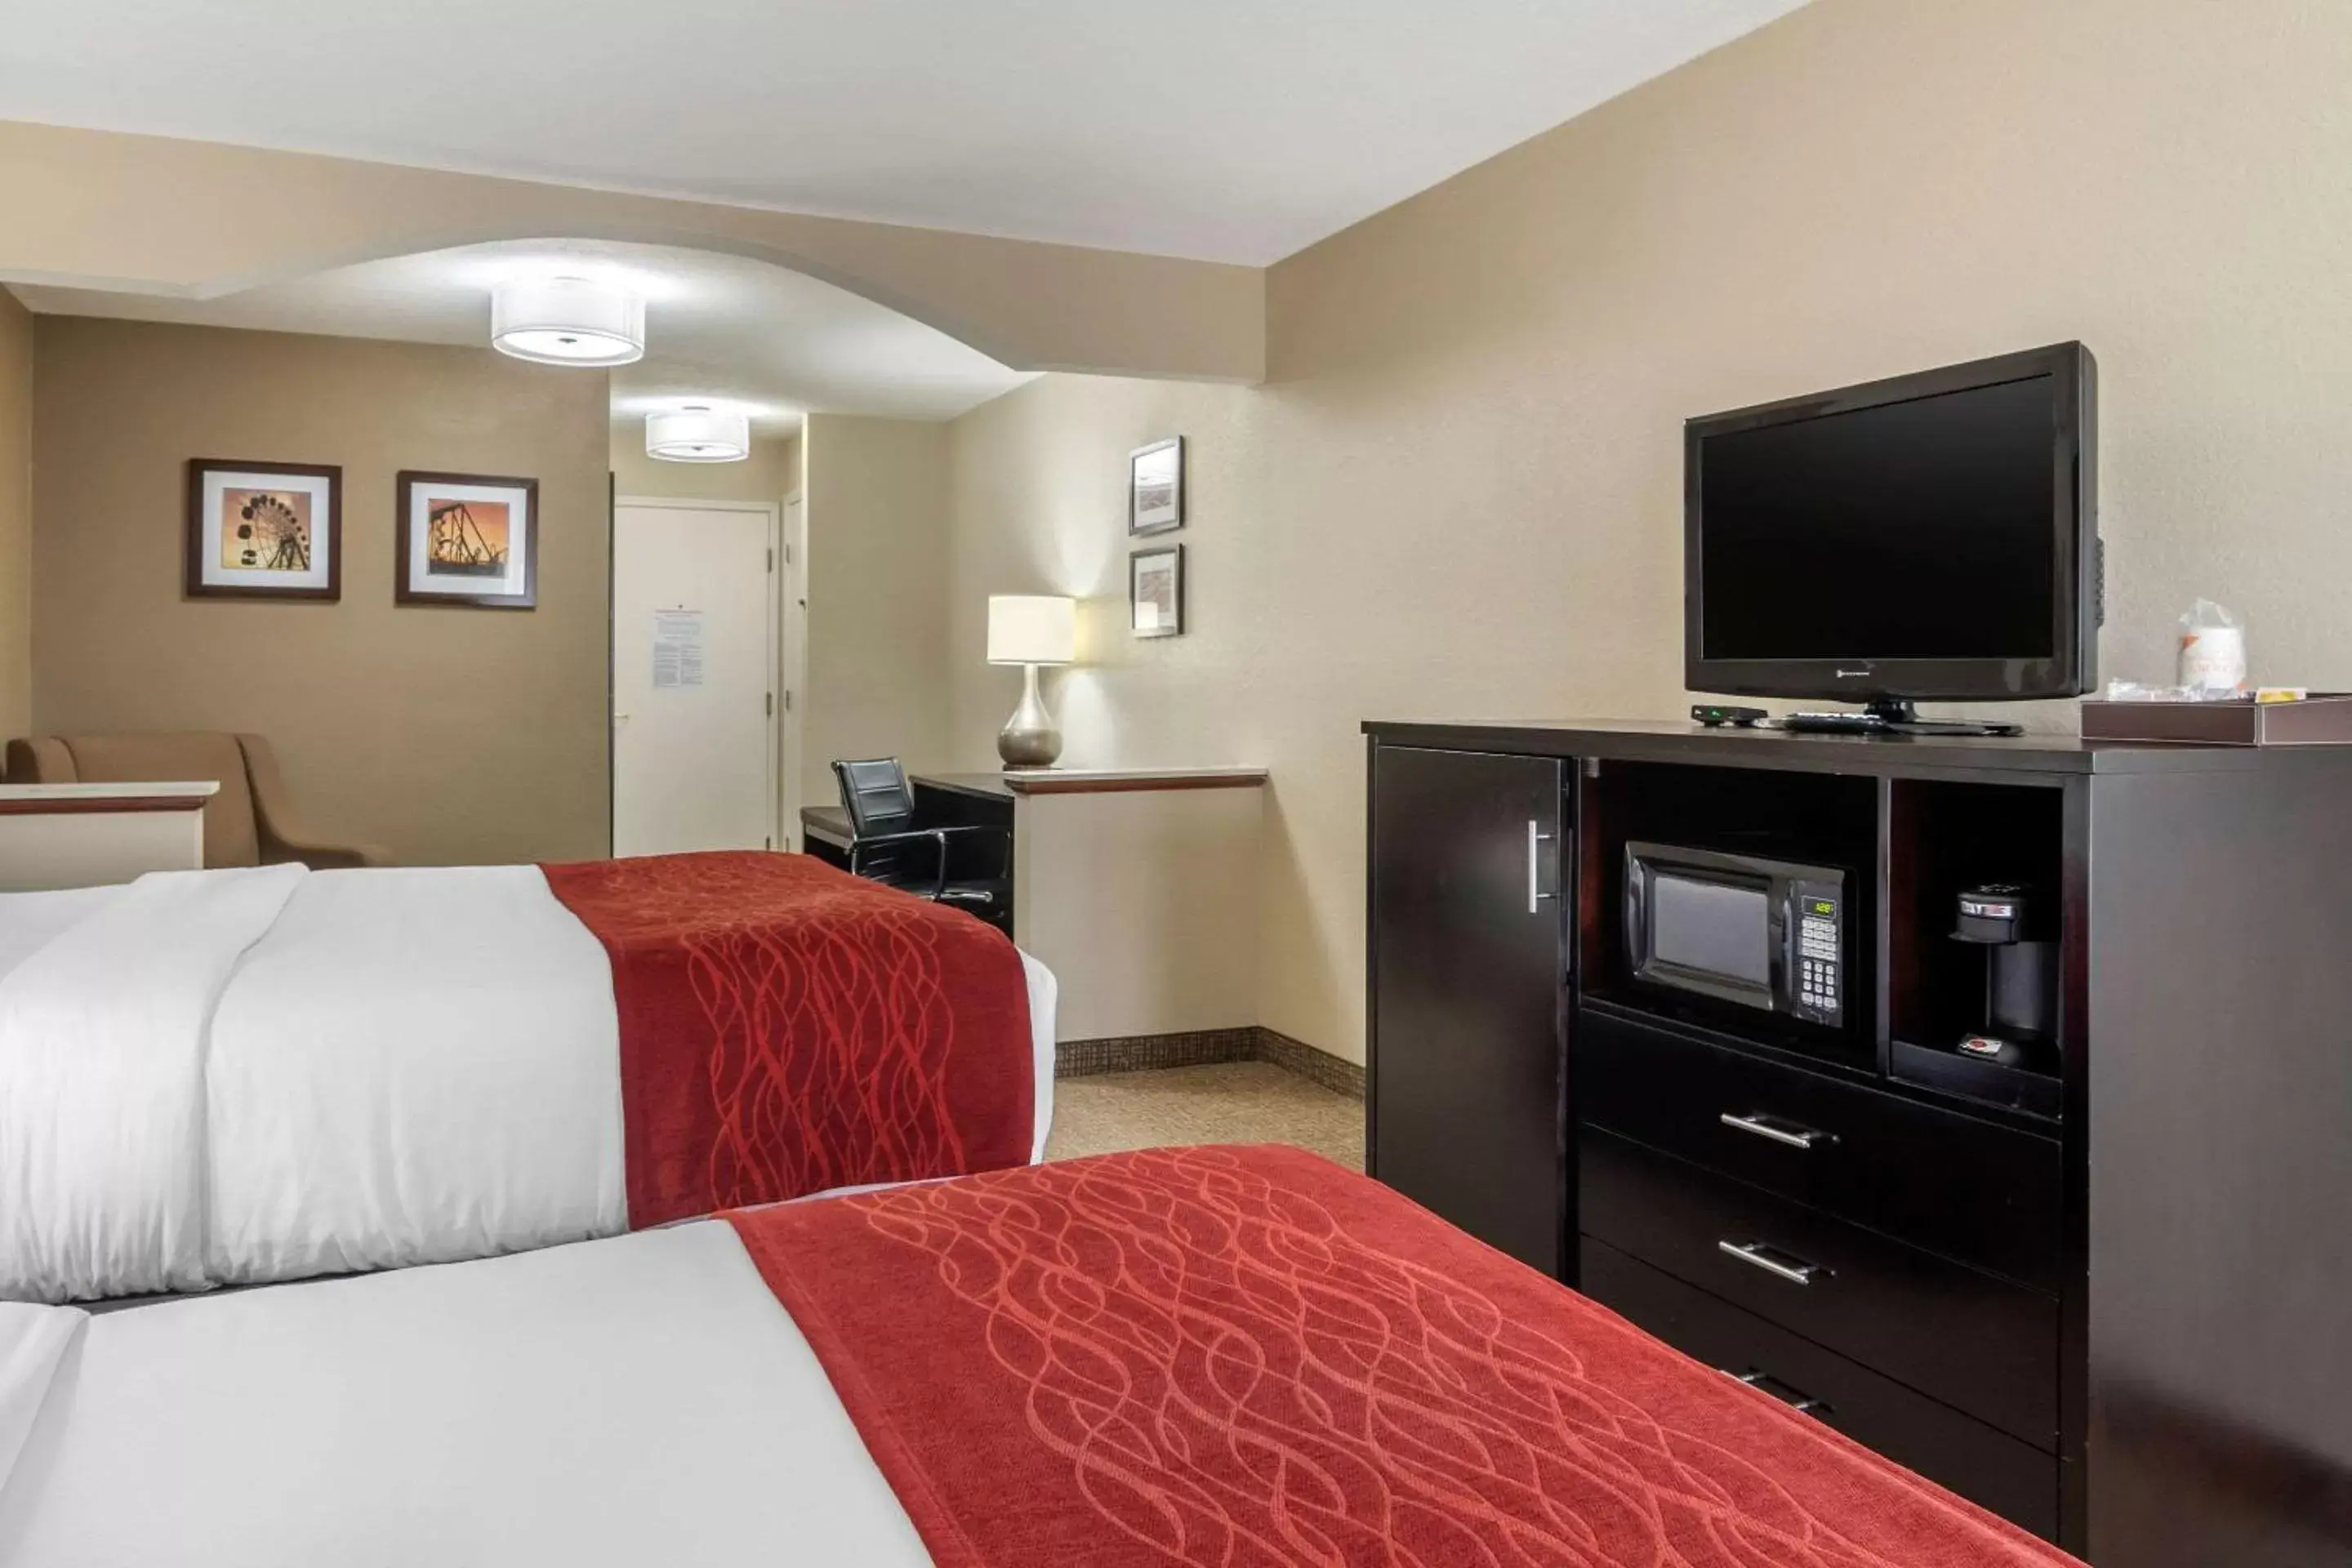 Bedroom, Room Photo in Comfort Inn & Suites Atlanta Smyrna